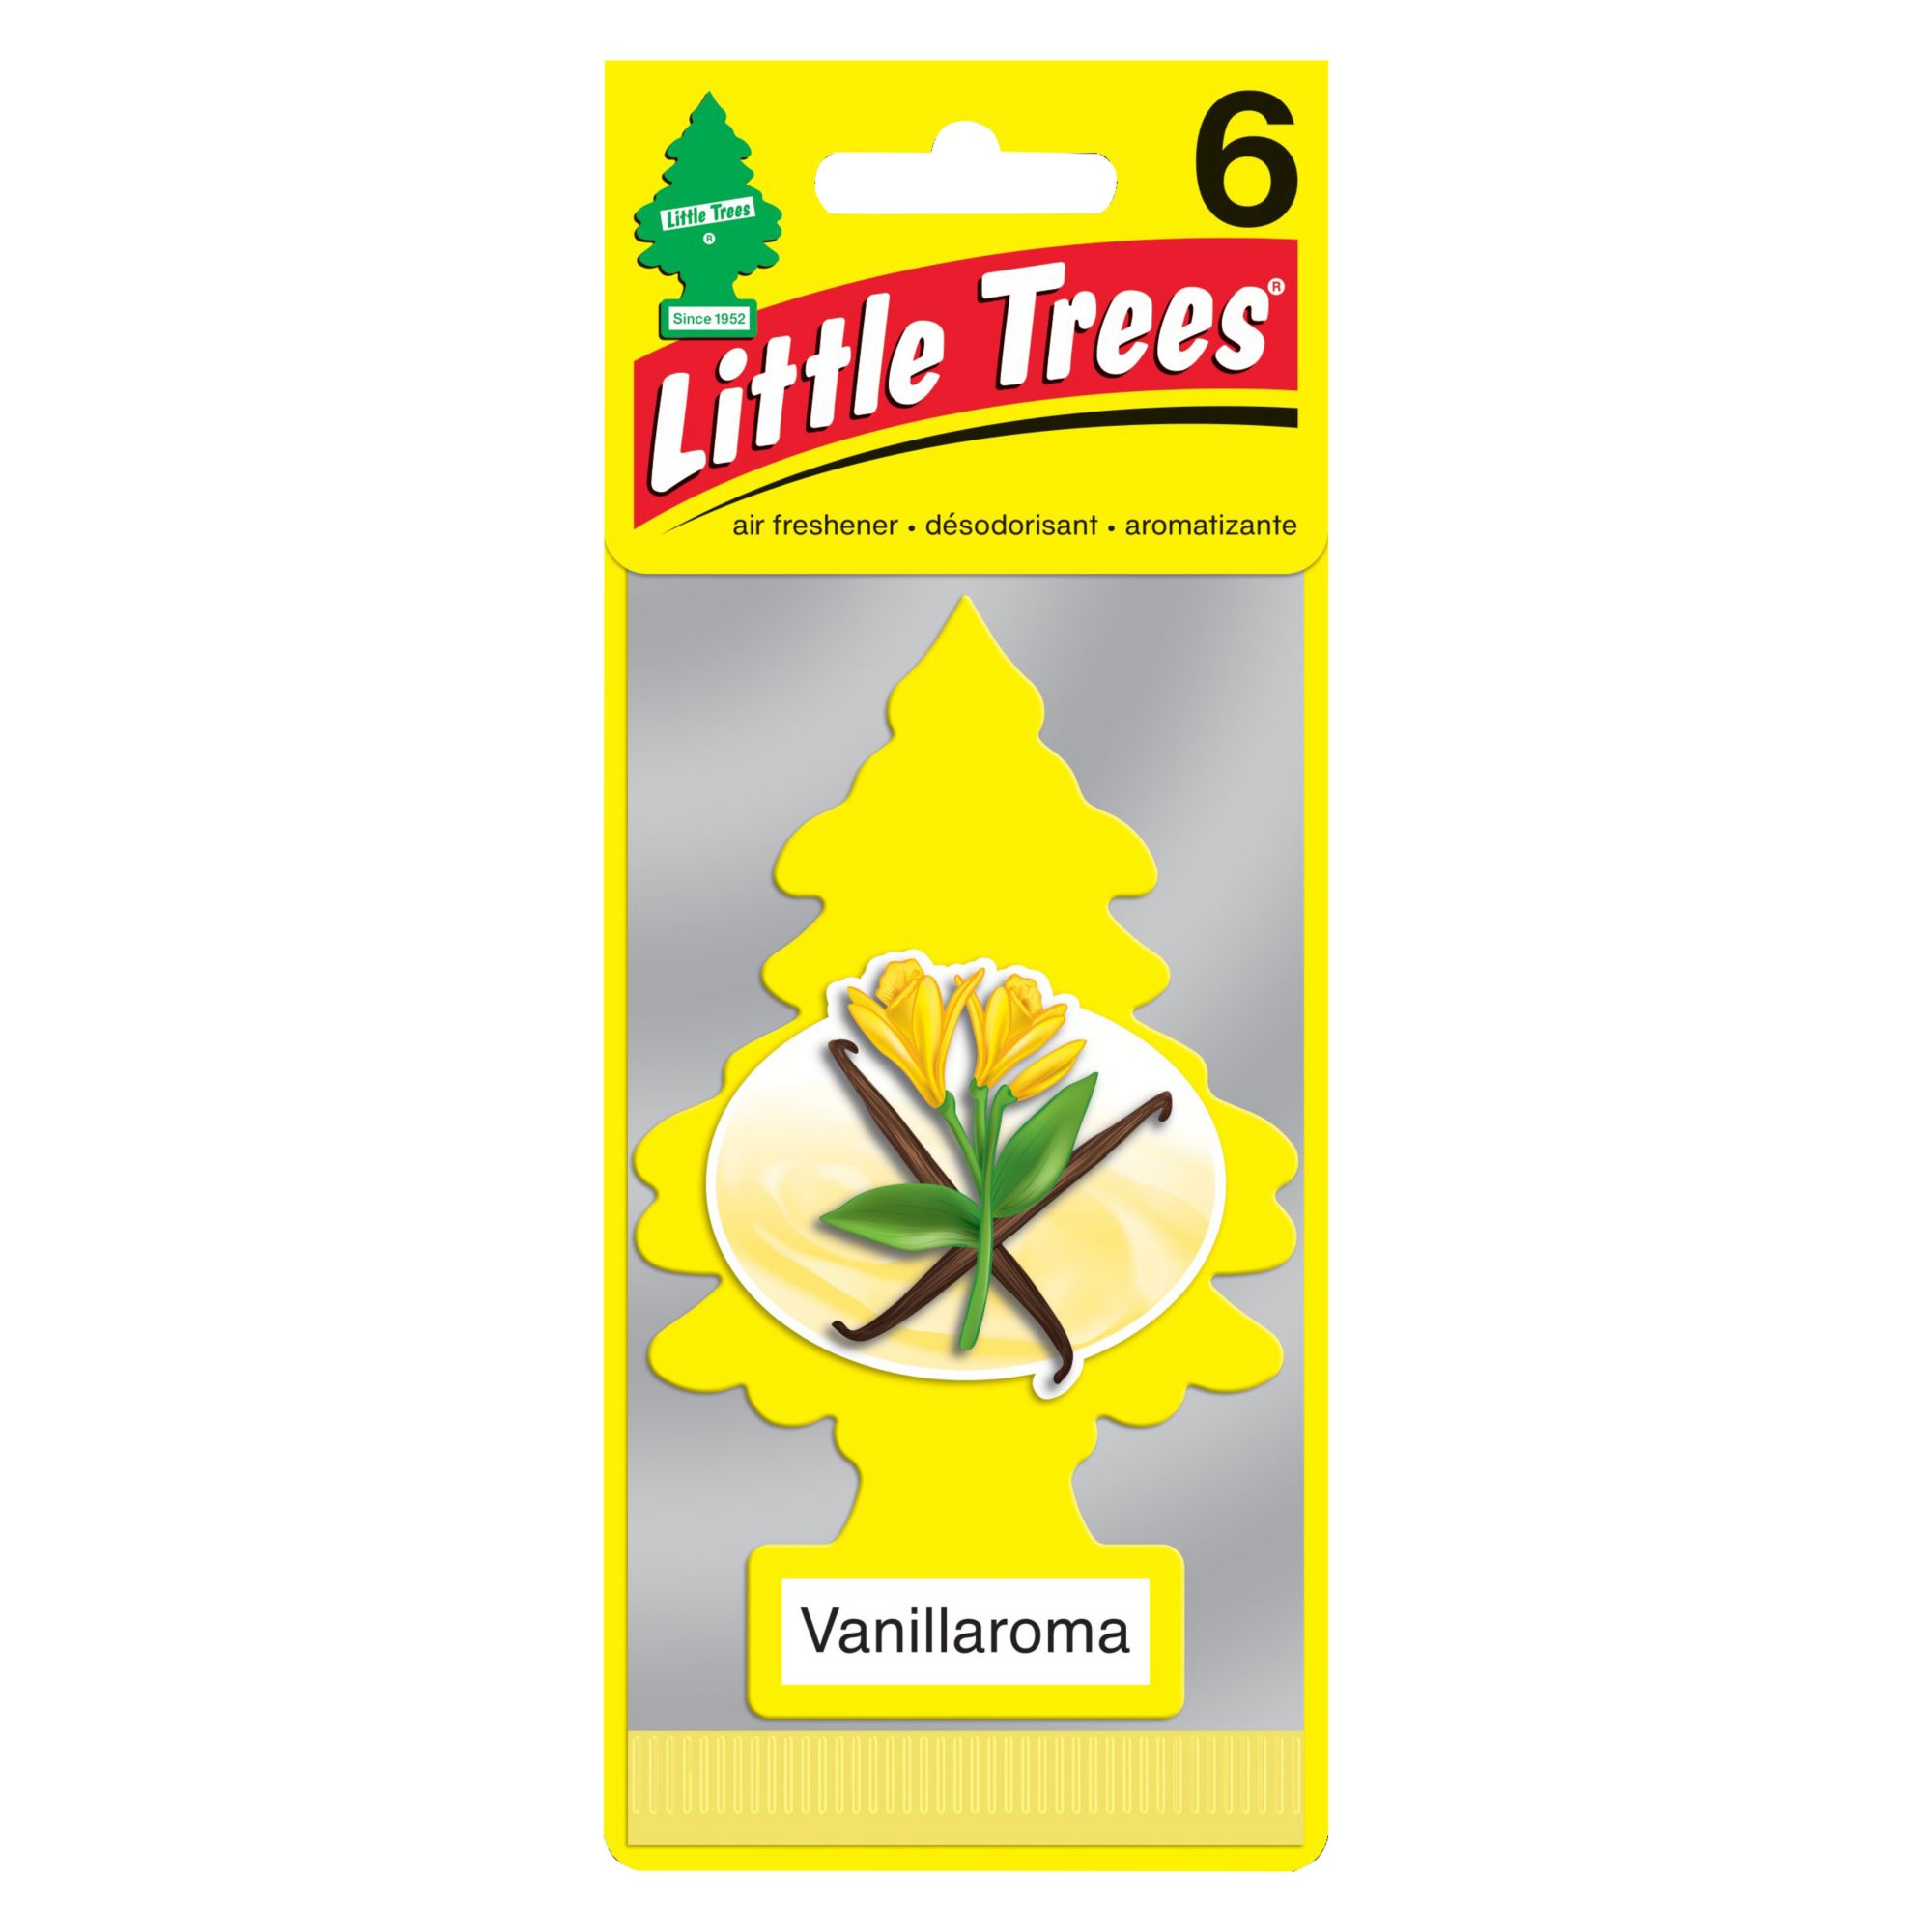 Little Trees Vanillaroma Air Fresheners, 6 pk.